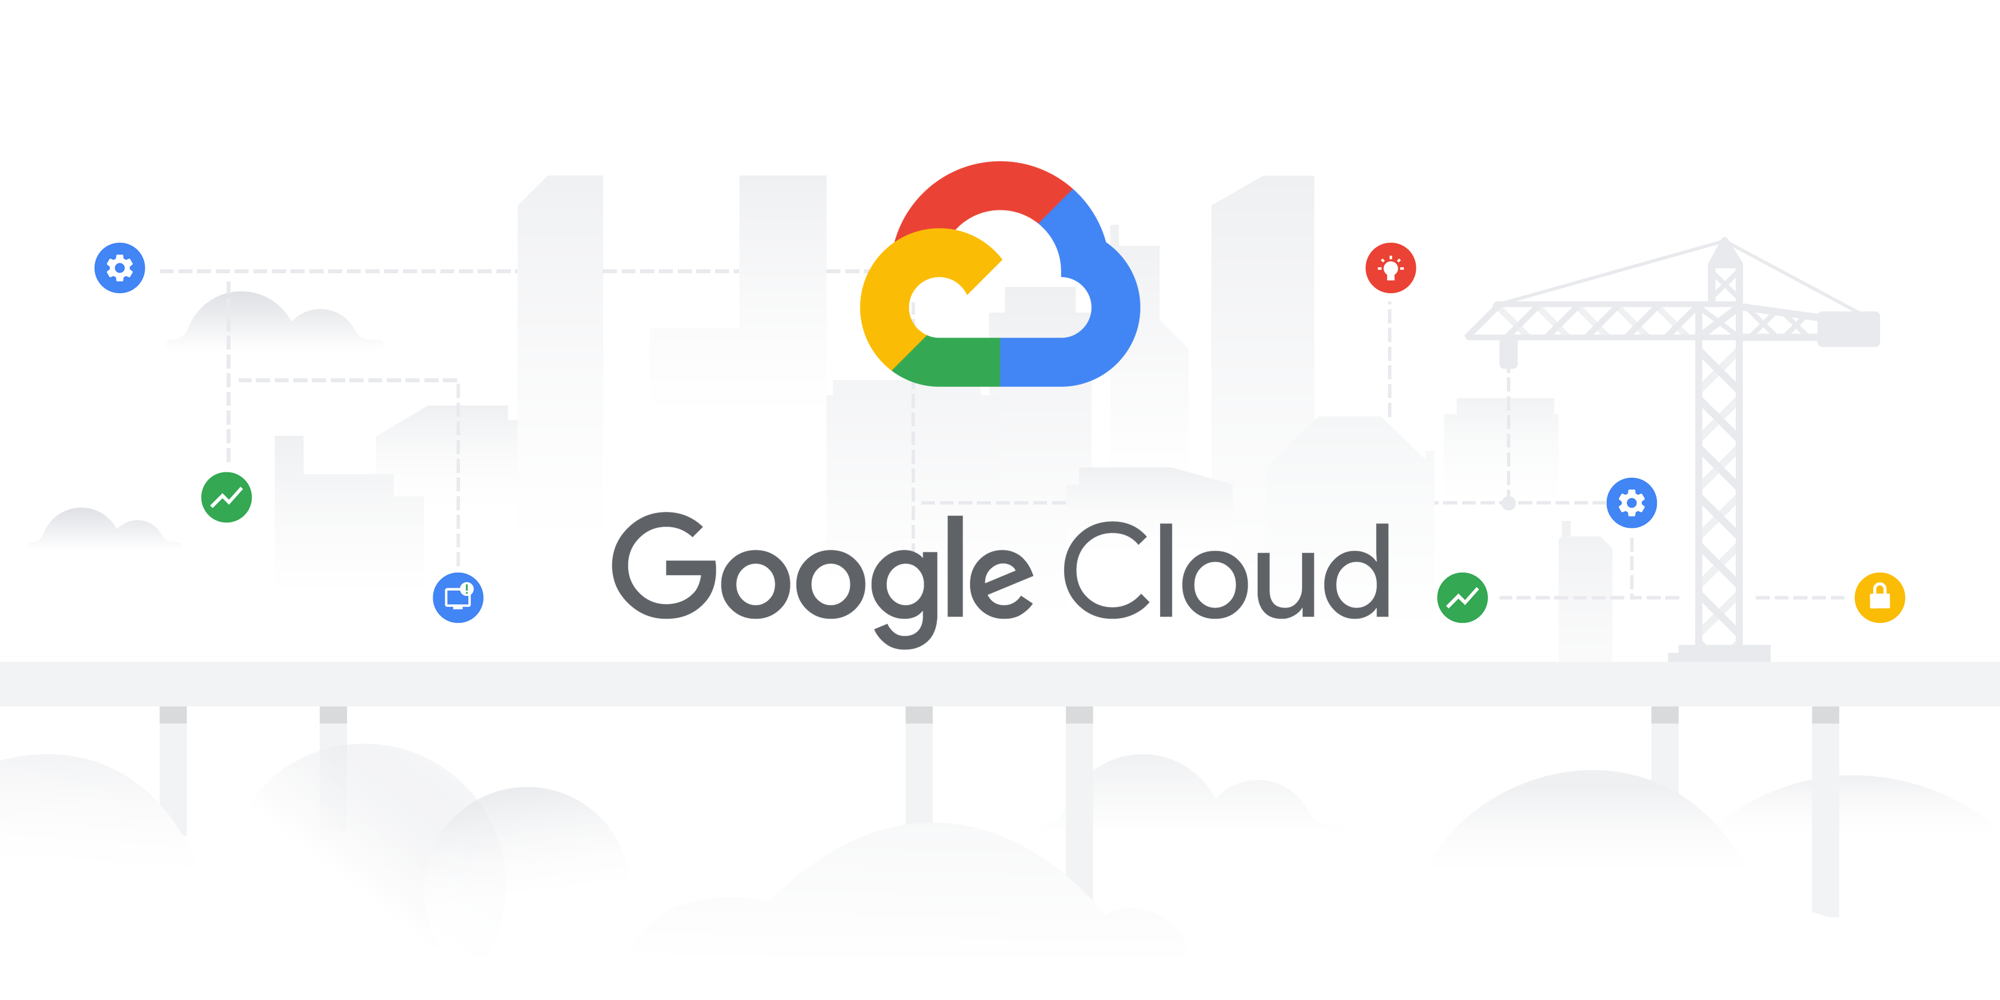 Why do people choose Google Cloud?